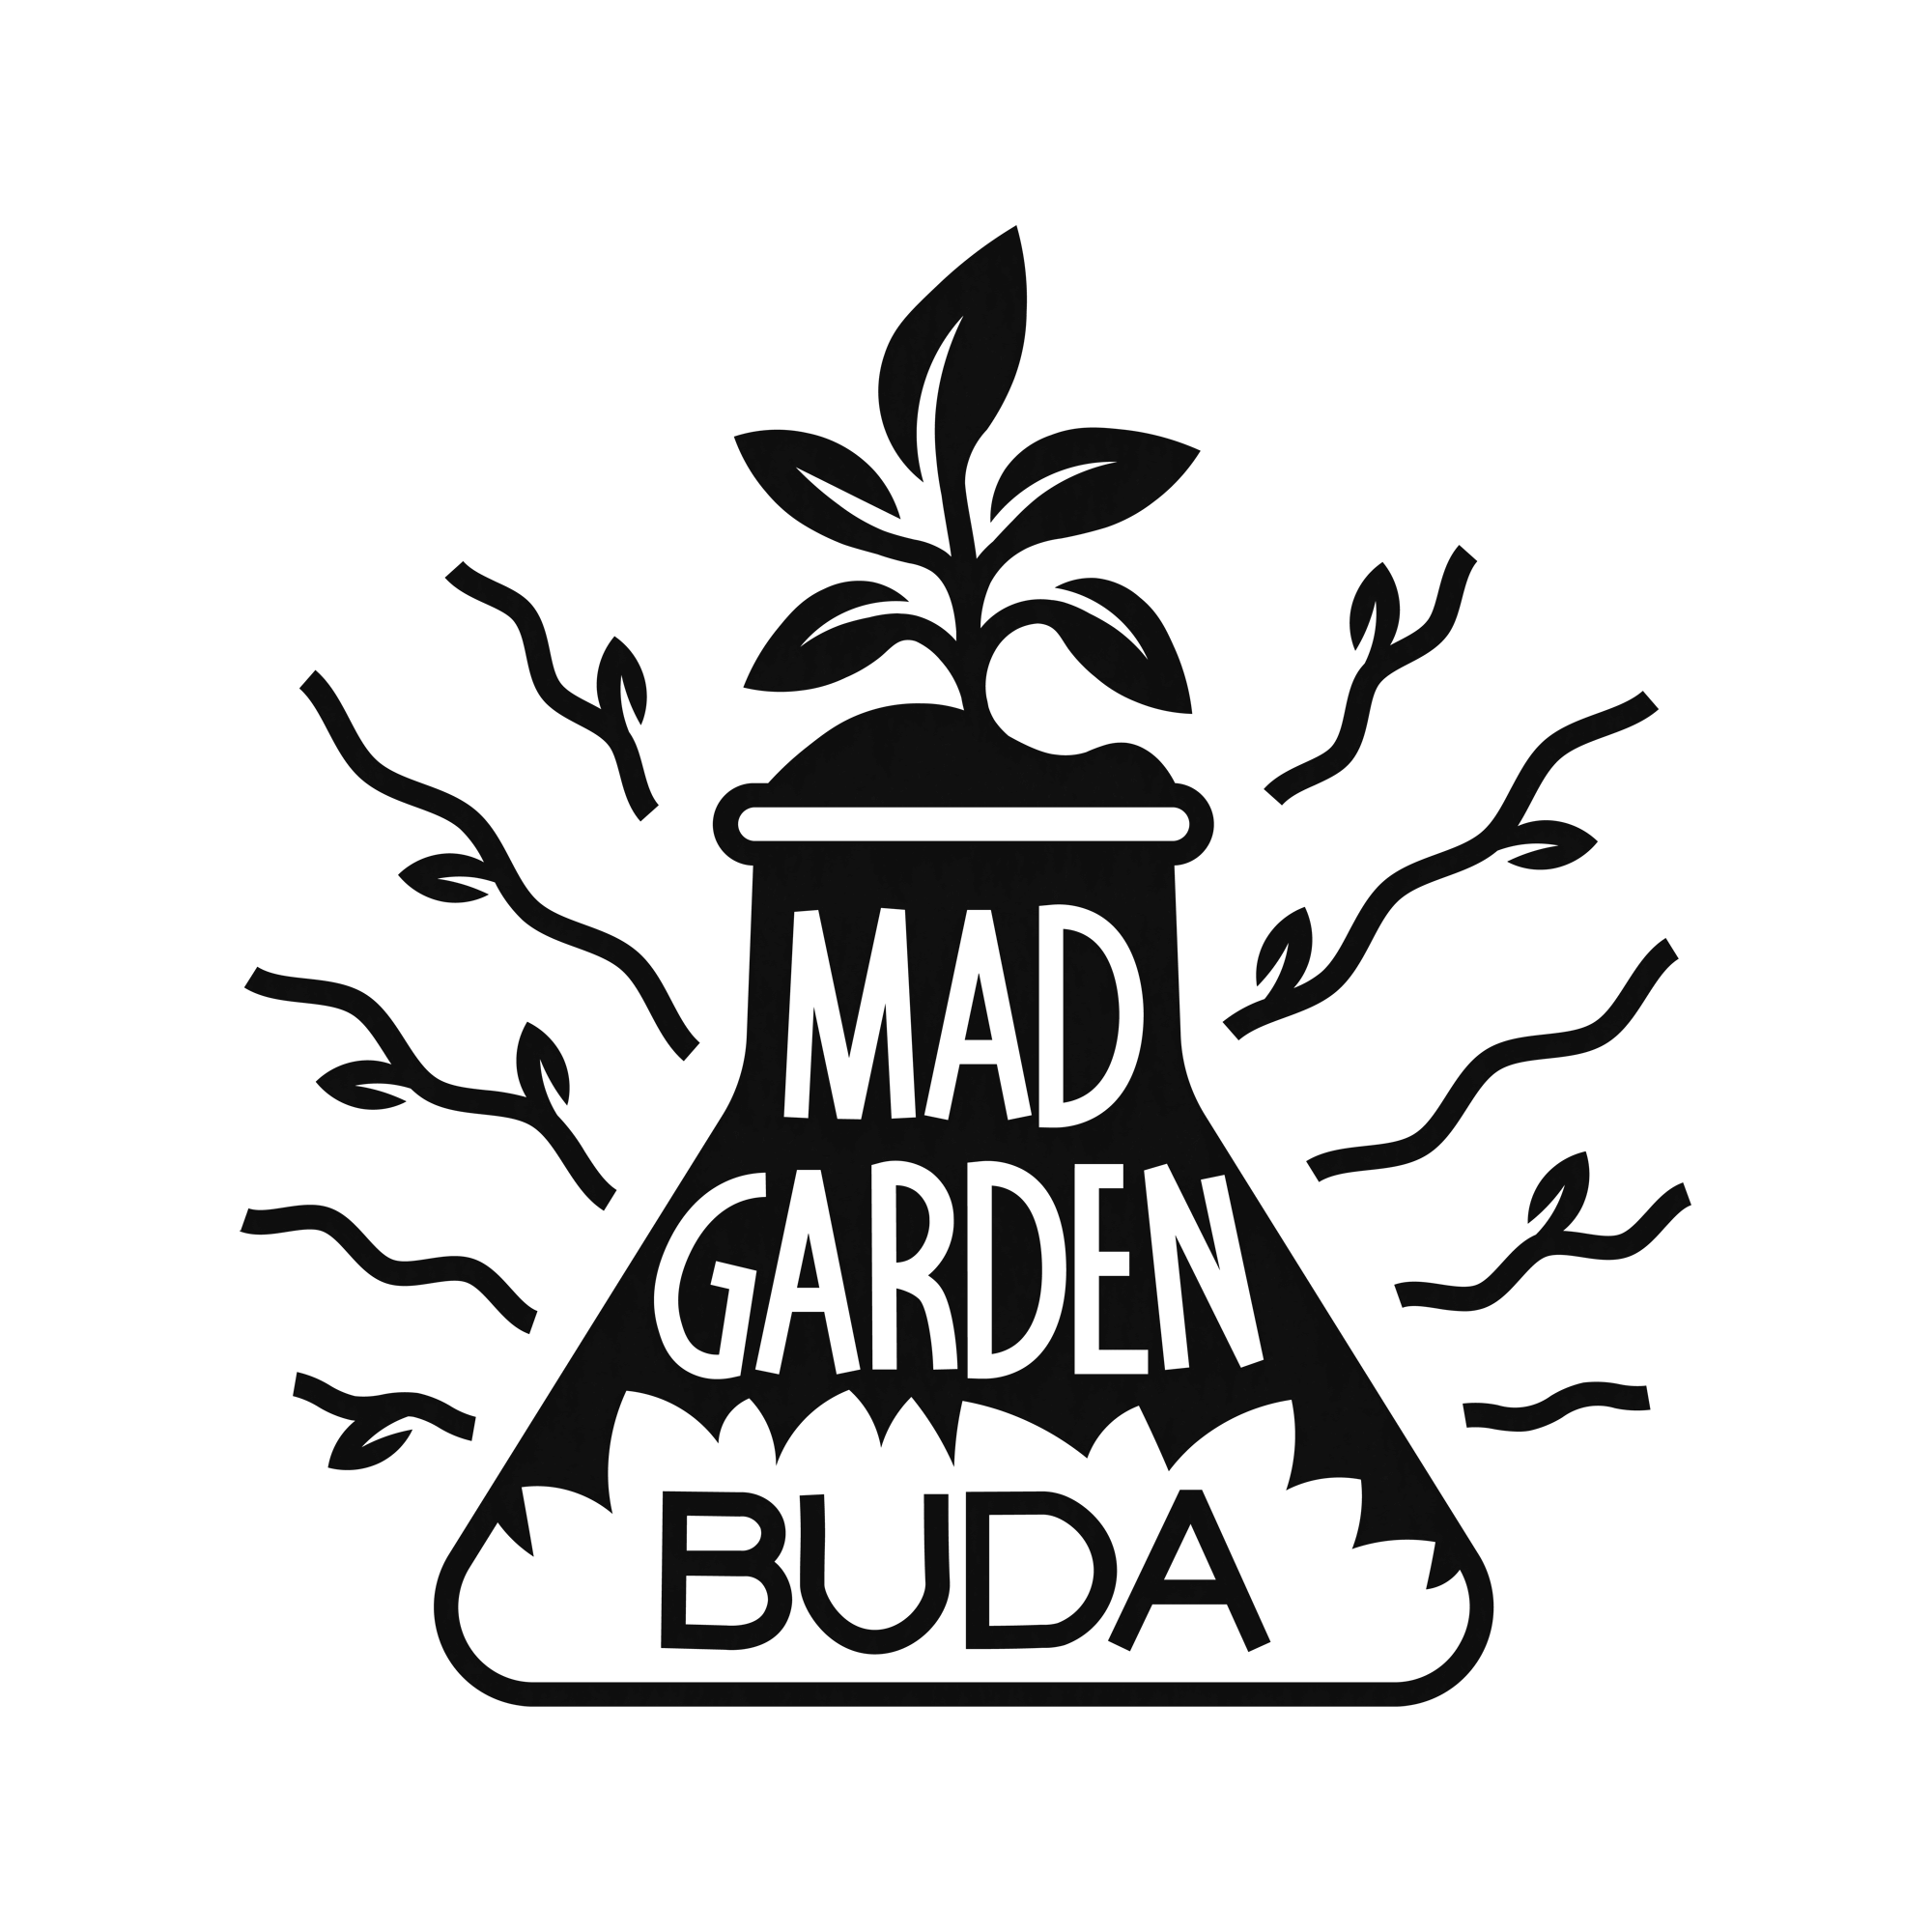 Mad Garden Buda